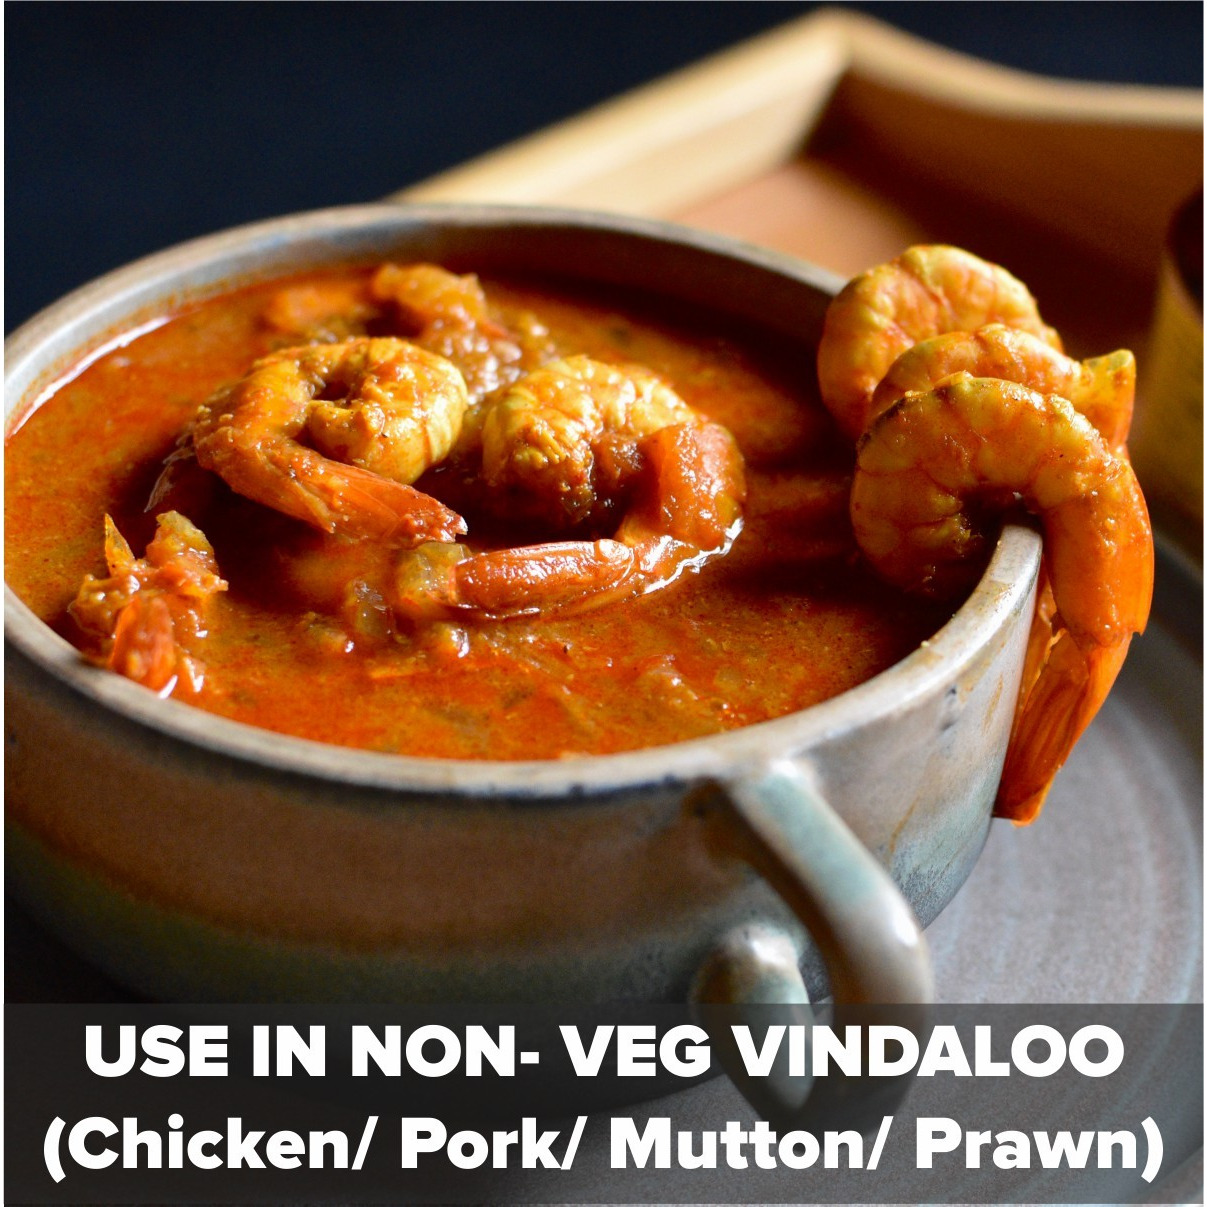 EL The Cook Goa Vindaloo Marinade, CONCENTRATE PASTE, Spicy & Tangy Indian Meat Marinade, 3 pack x 1.7oz, Vegetarian, Gluten Free (Flavor: Vindaloo - 3 Pack)